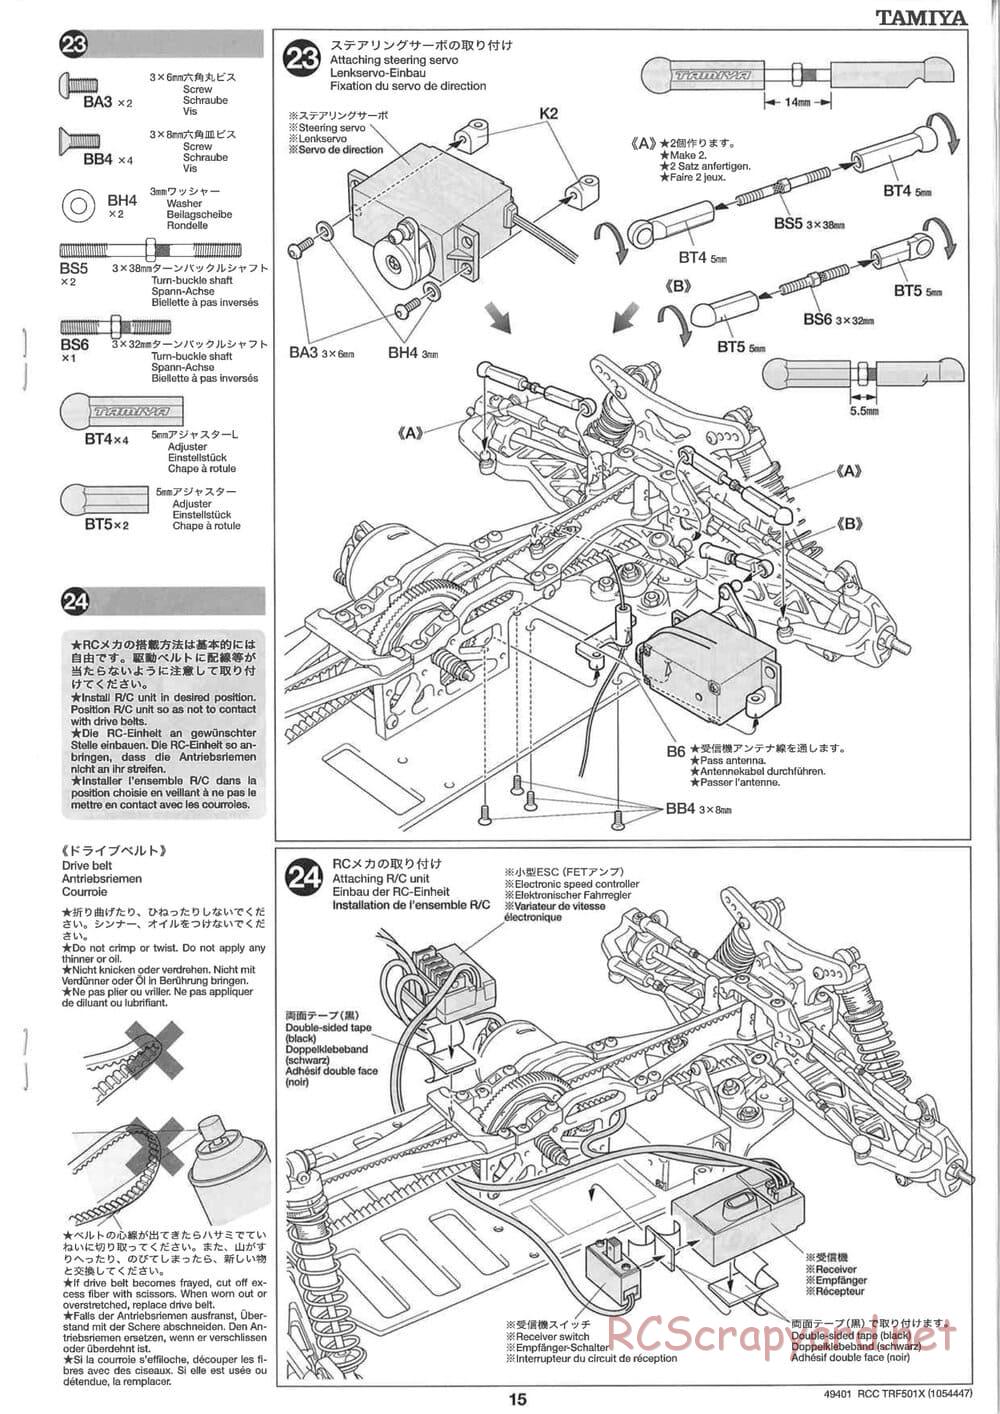 Tamiya - TRF501X Chassis - Manual - Page 15